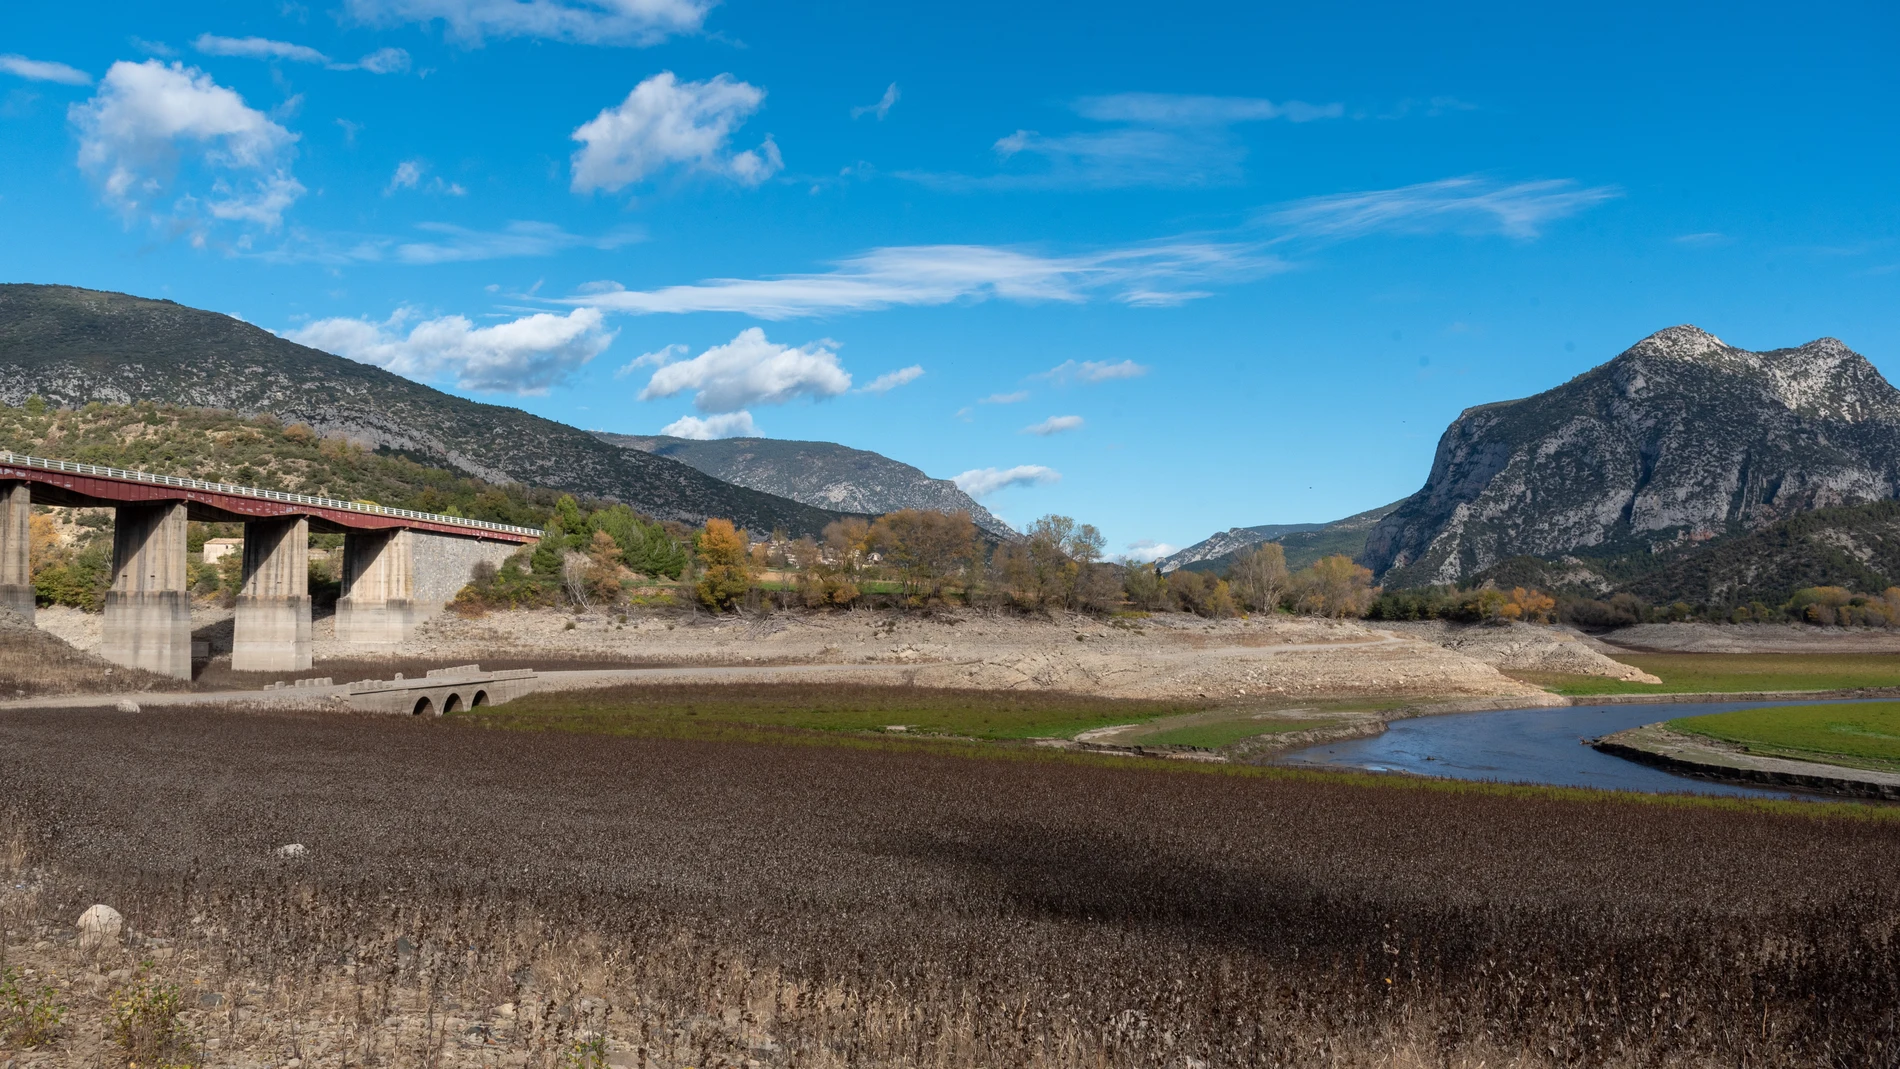 En la imagen aspecto del pantano de Oliana en el termino municipal de Coll de Nargó (Lleida)